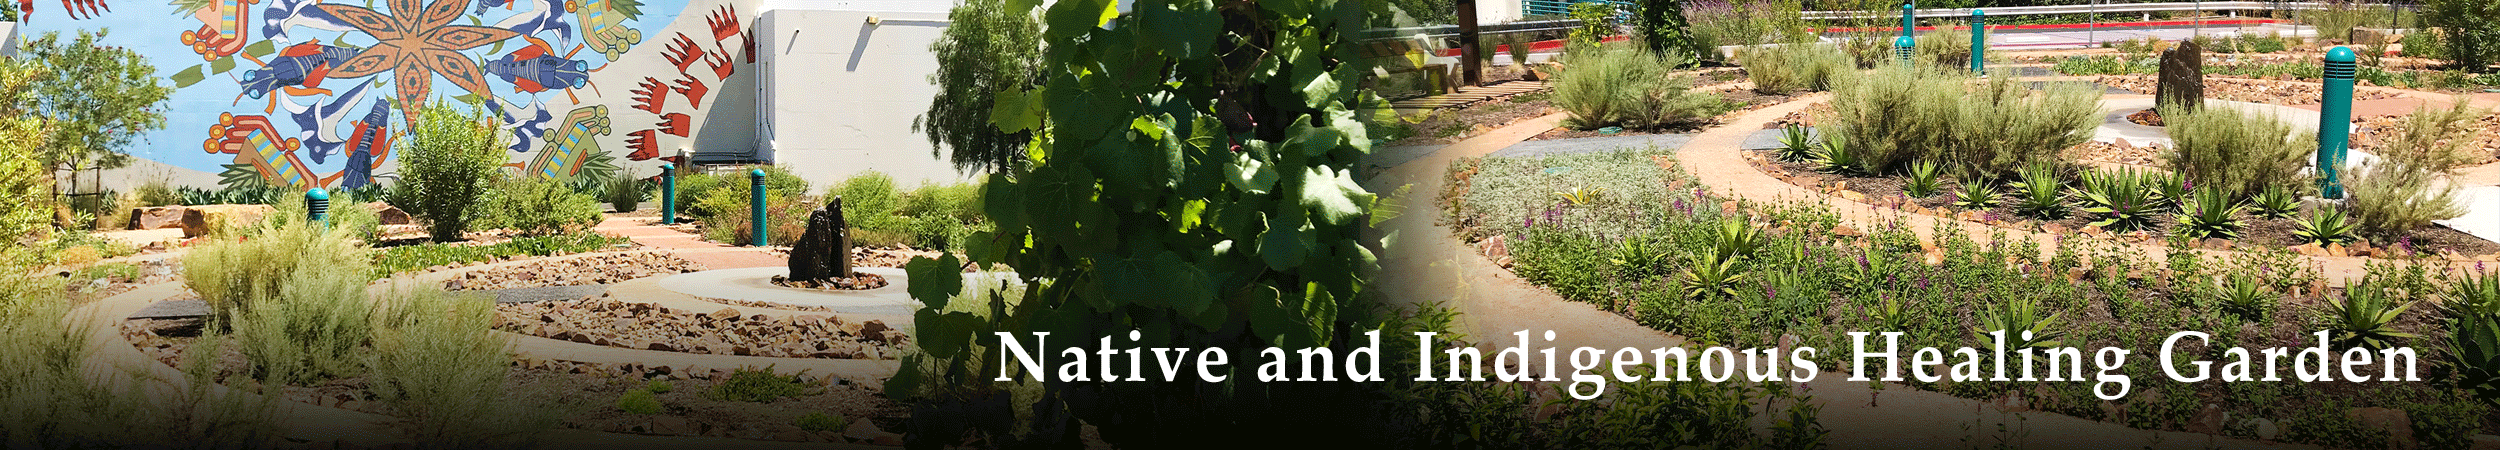 Native and Indigenous Healing Garden